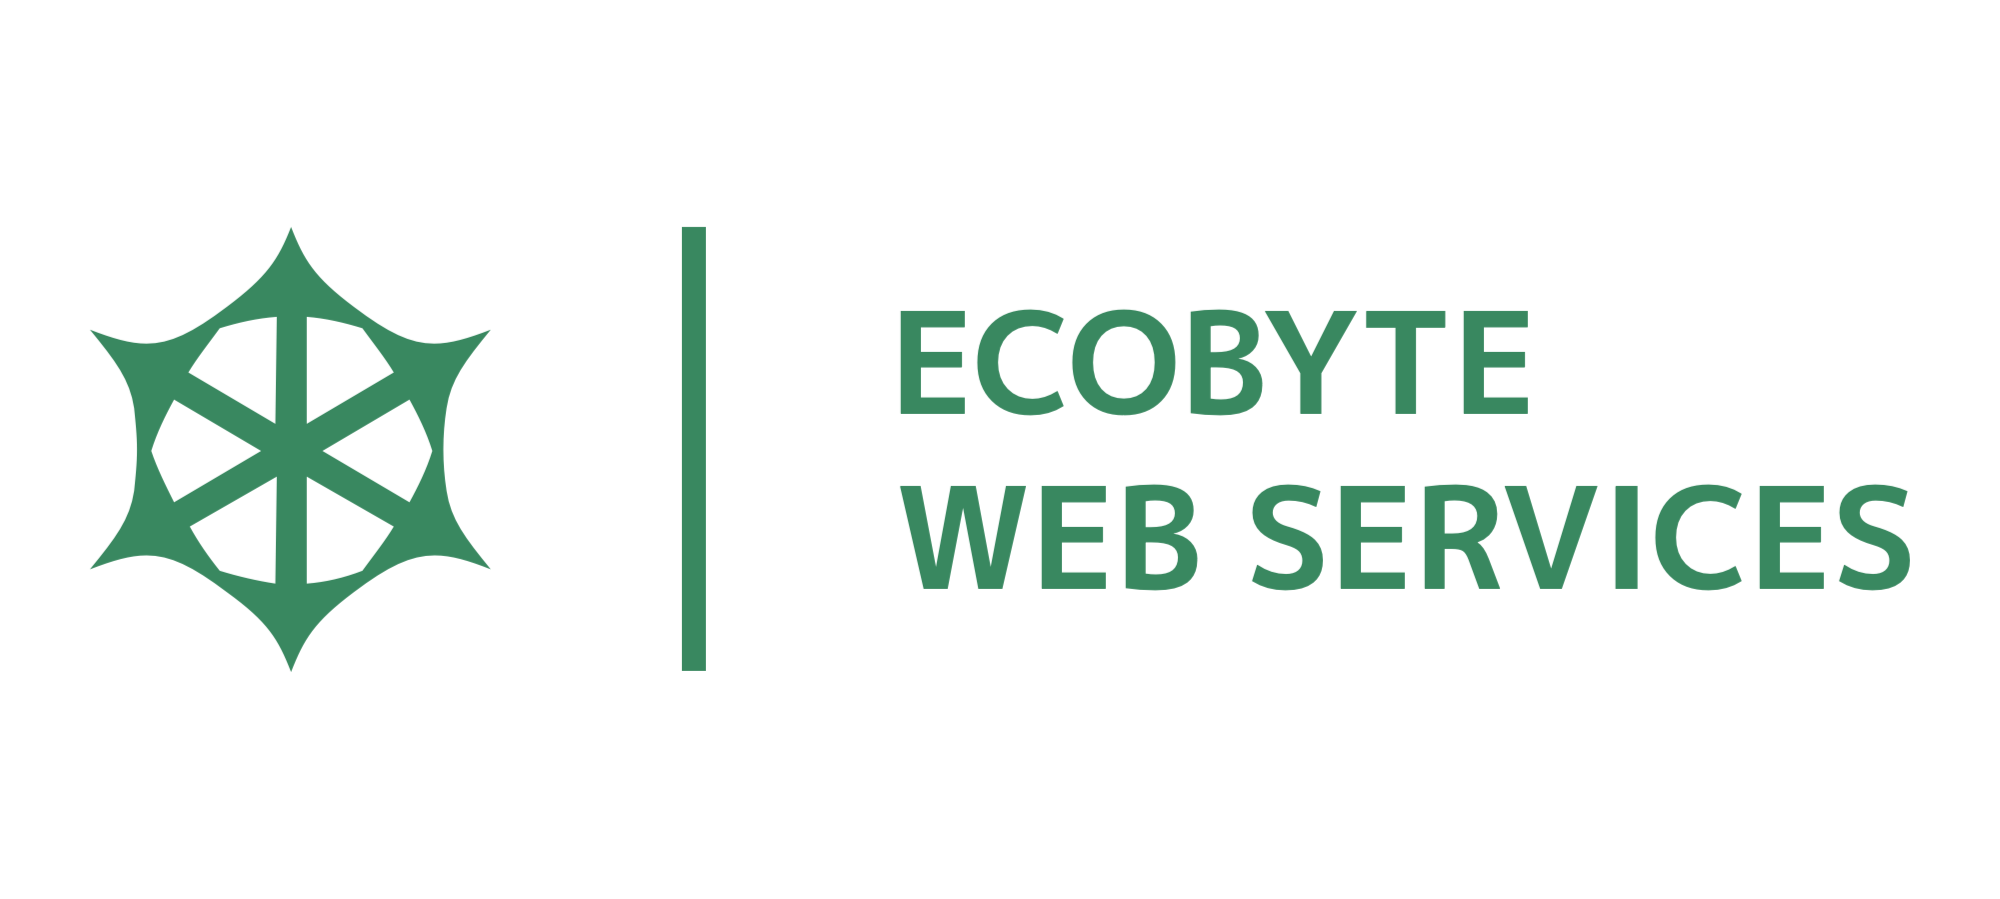 Ecobyte Web Services